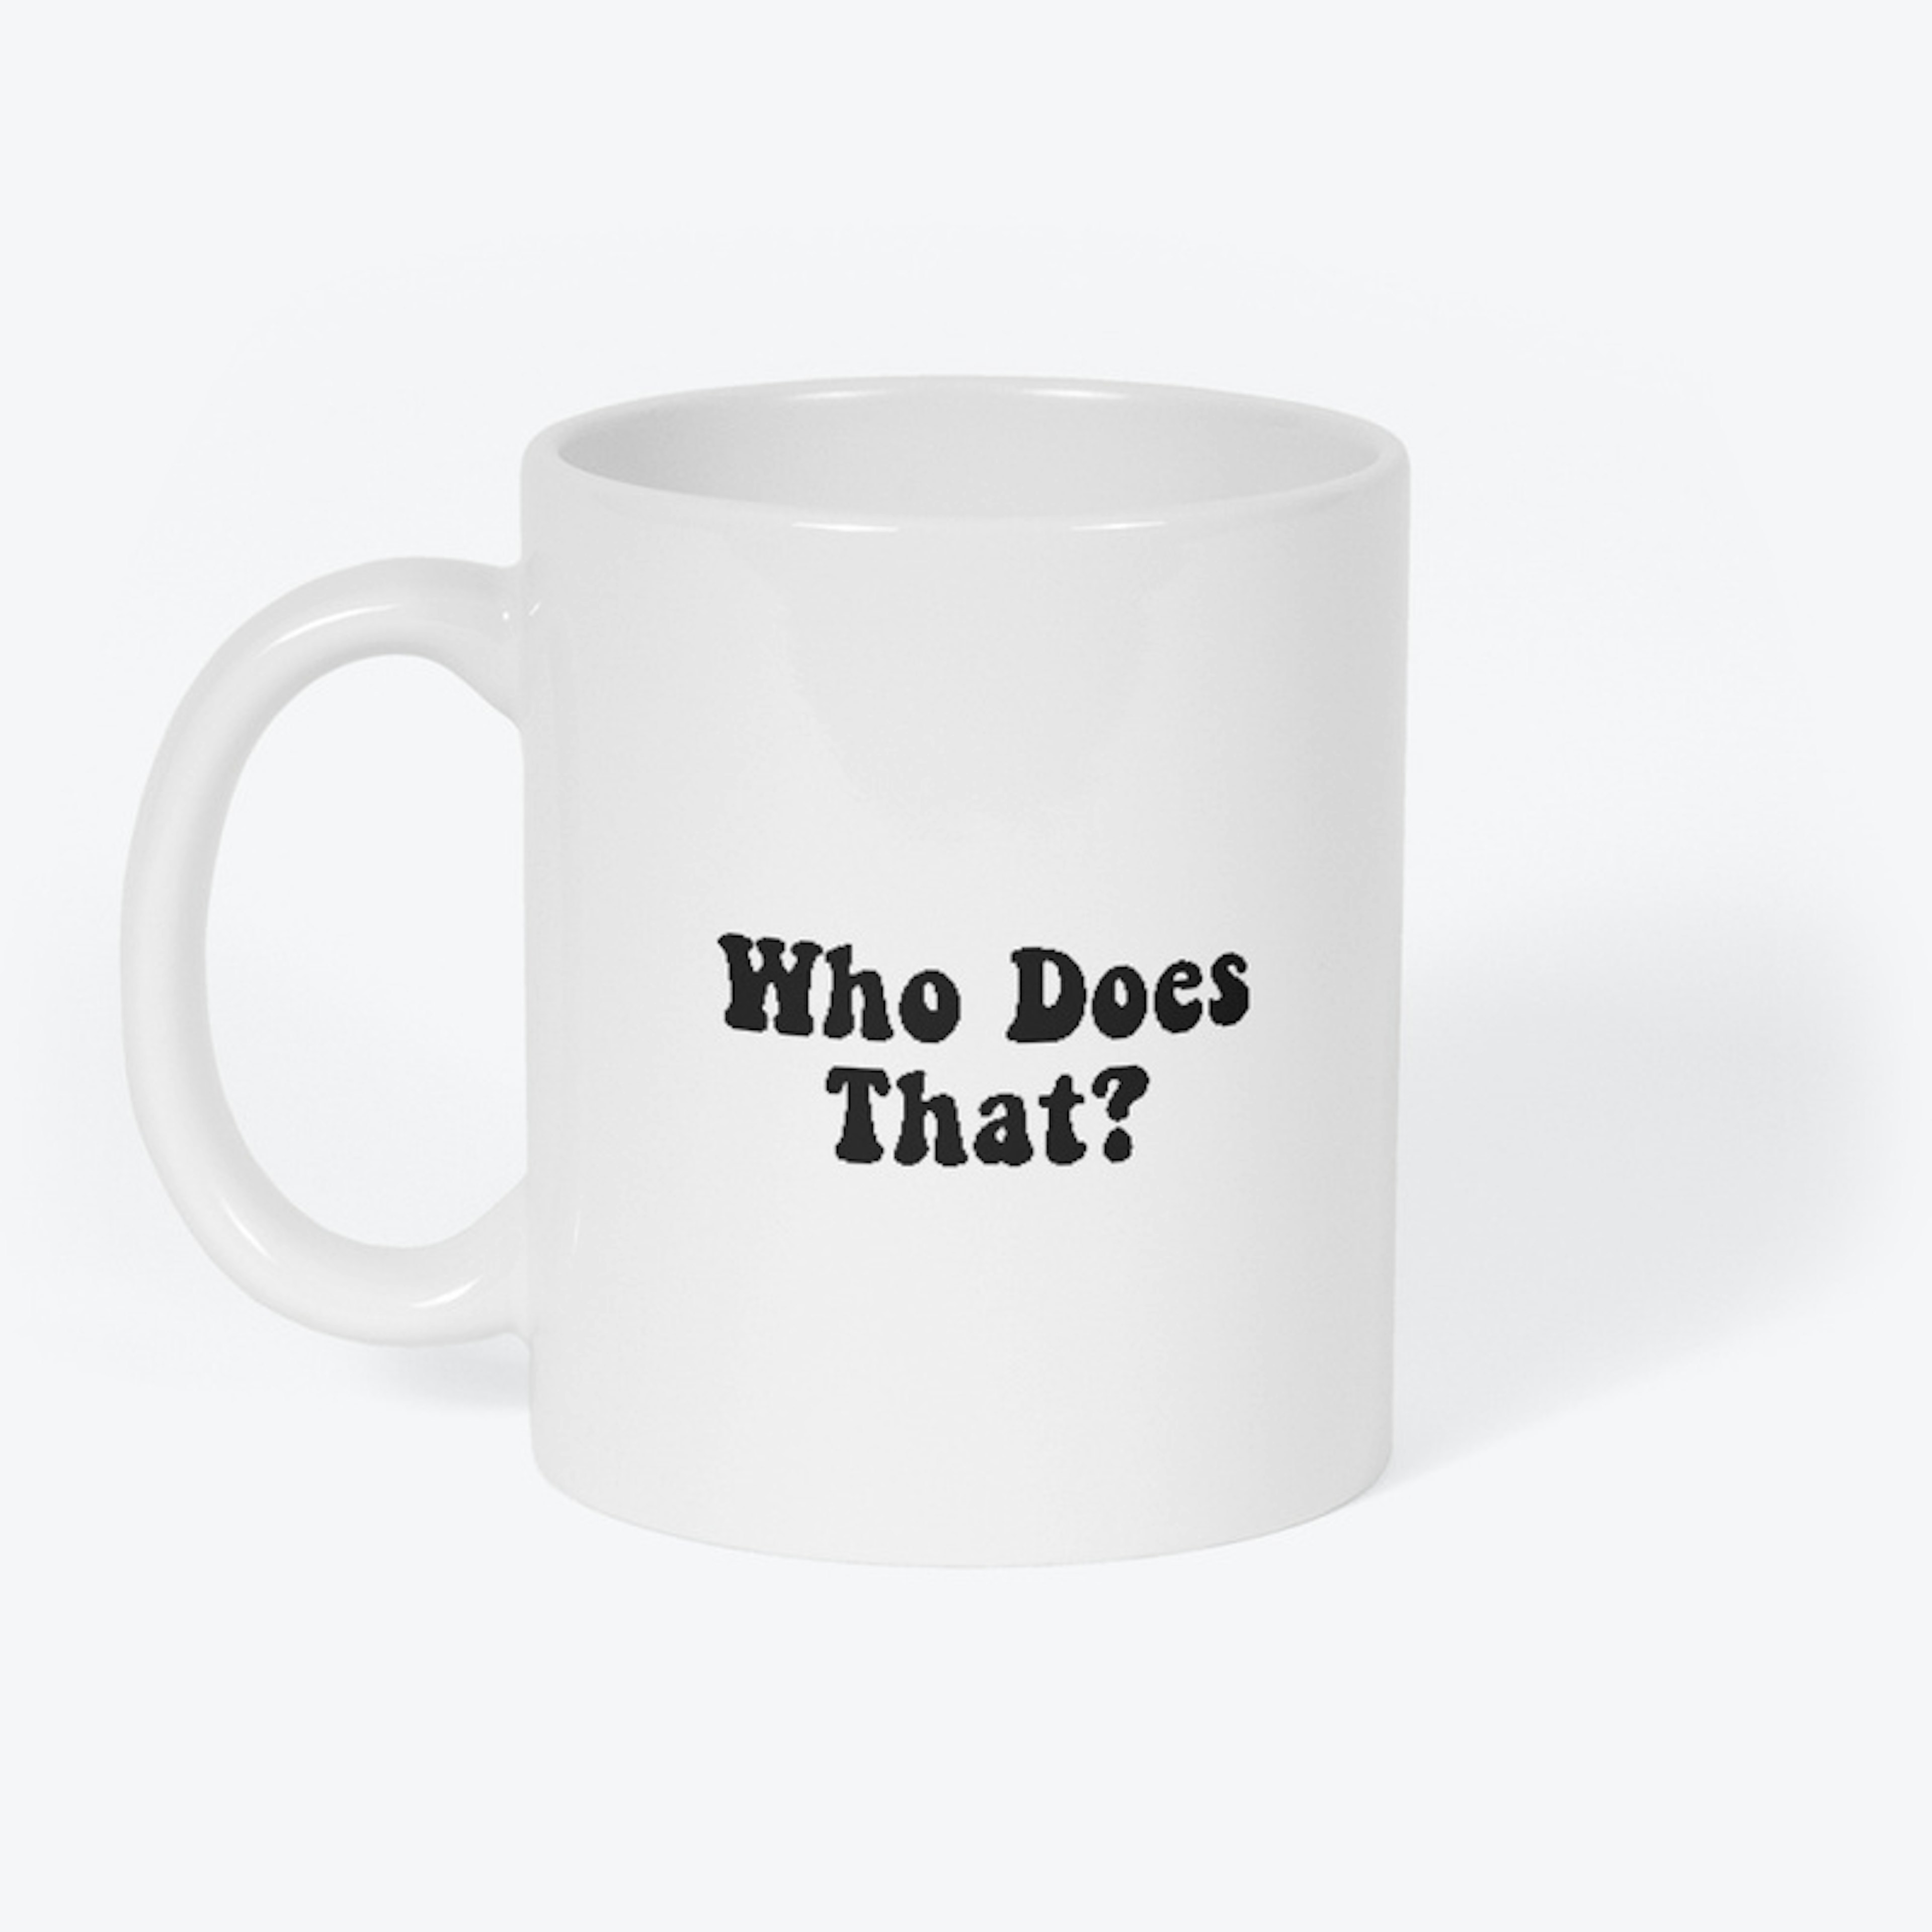 Who Does That? Mug